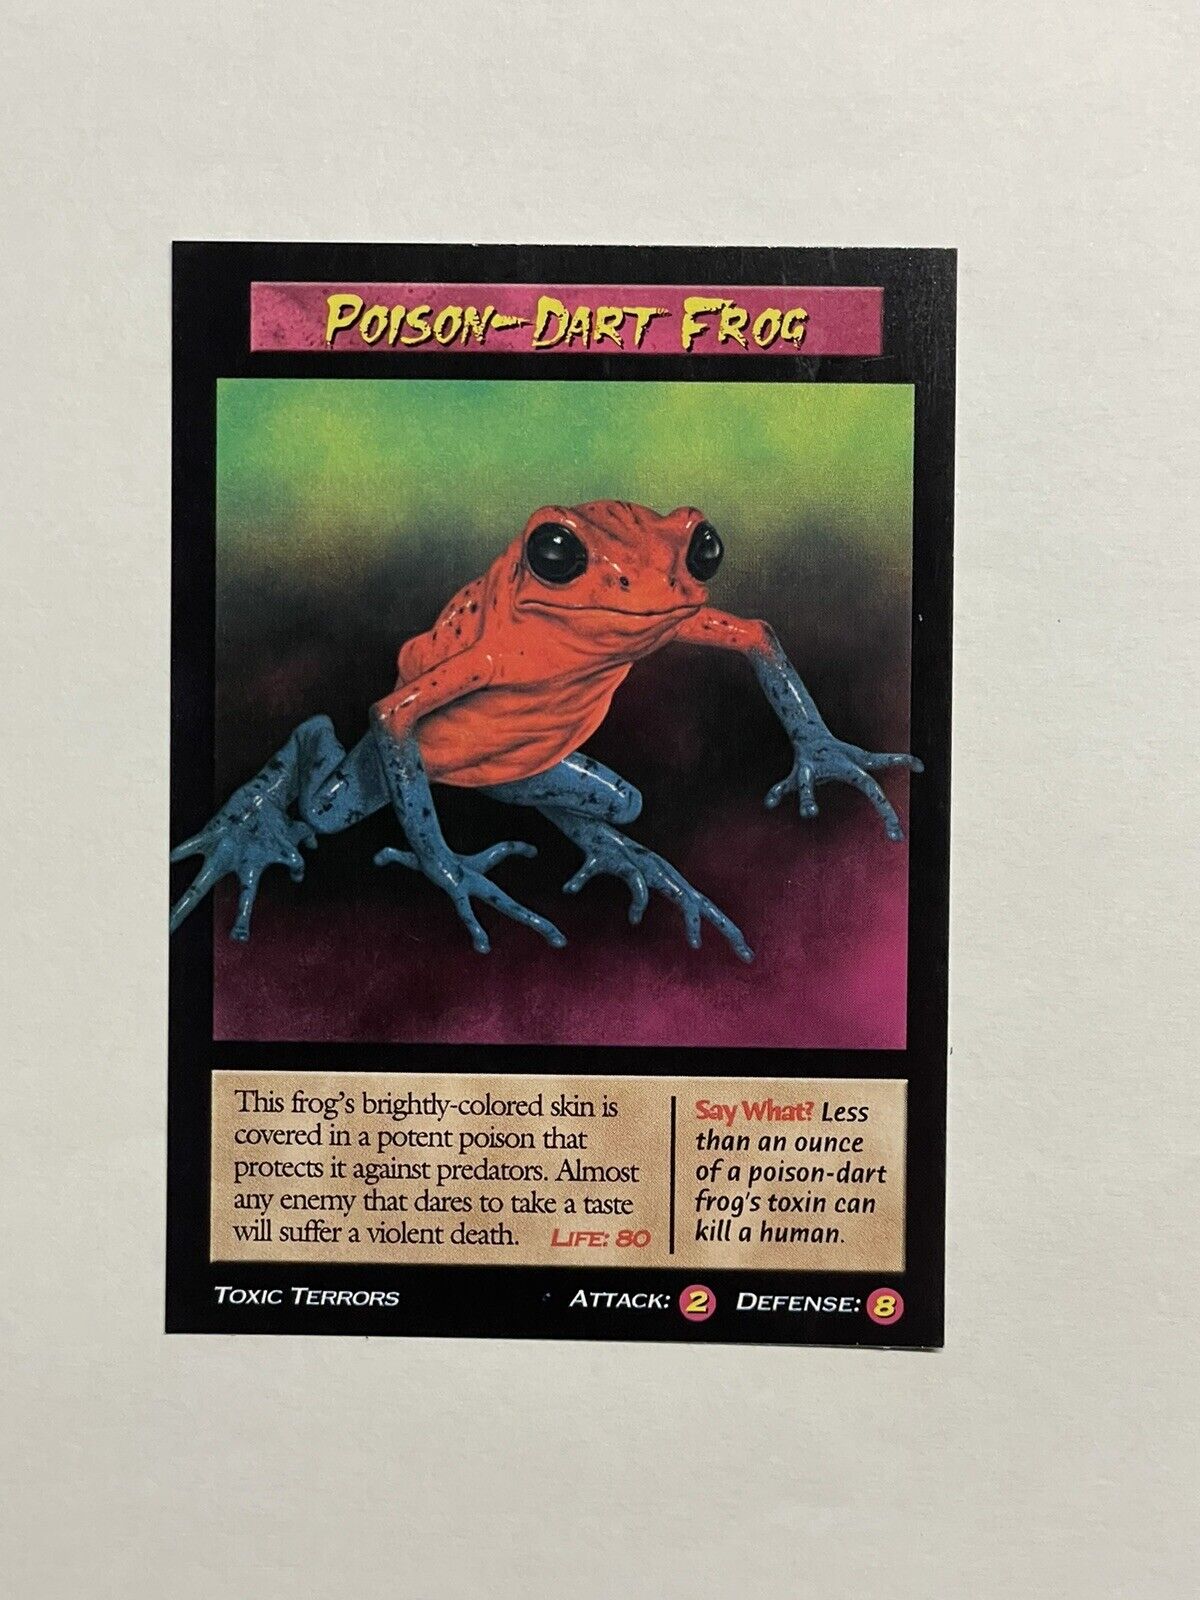 2004 IMP AB Weird n’ Wild Creatures Toxic Terrors Poison-Dart Frog